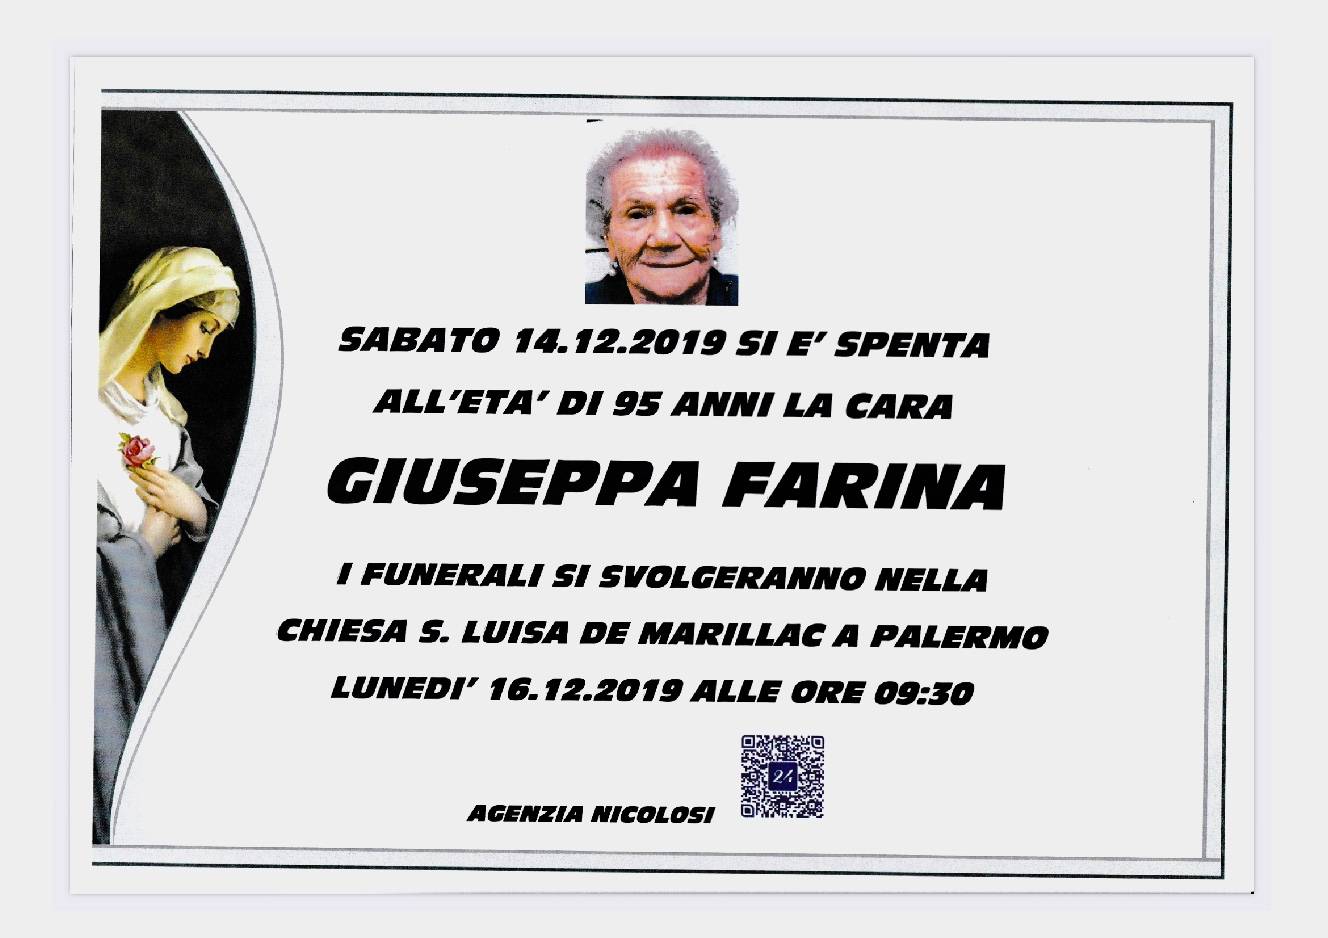 Giuseppa Farina